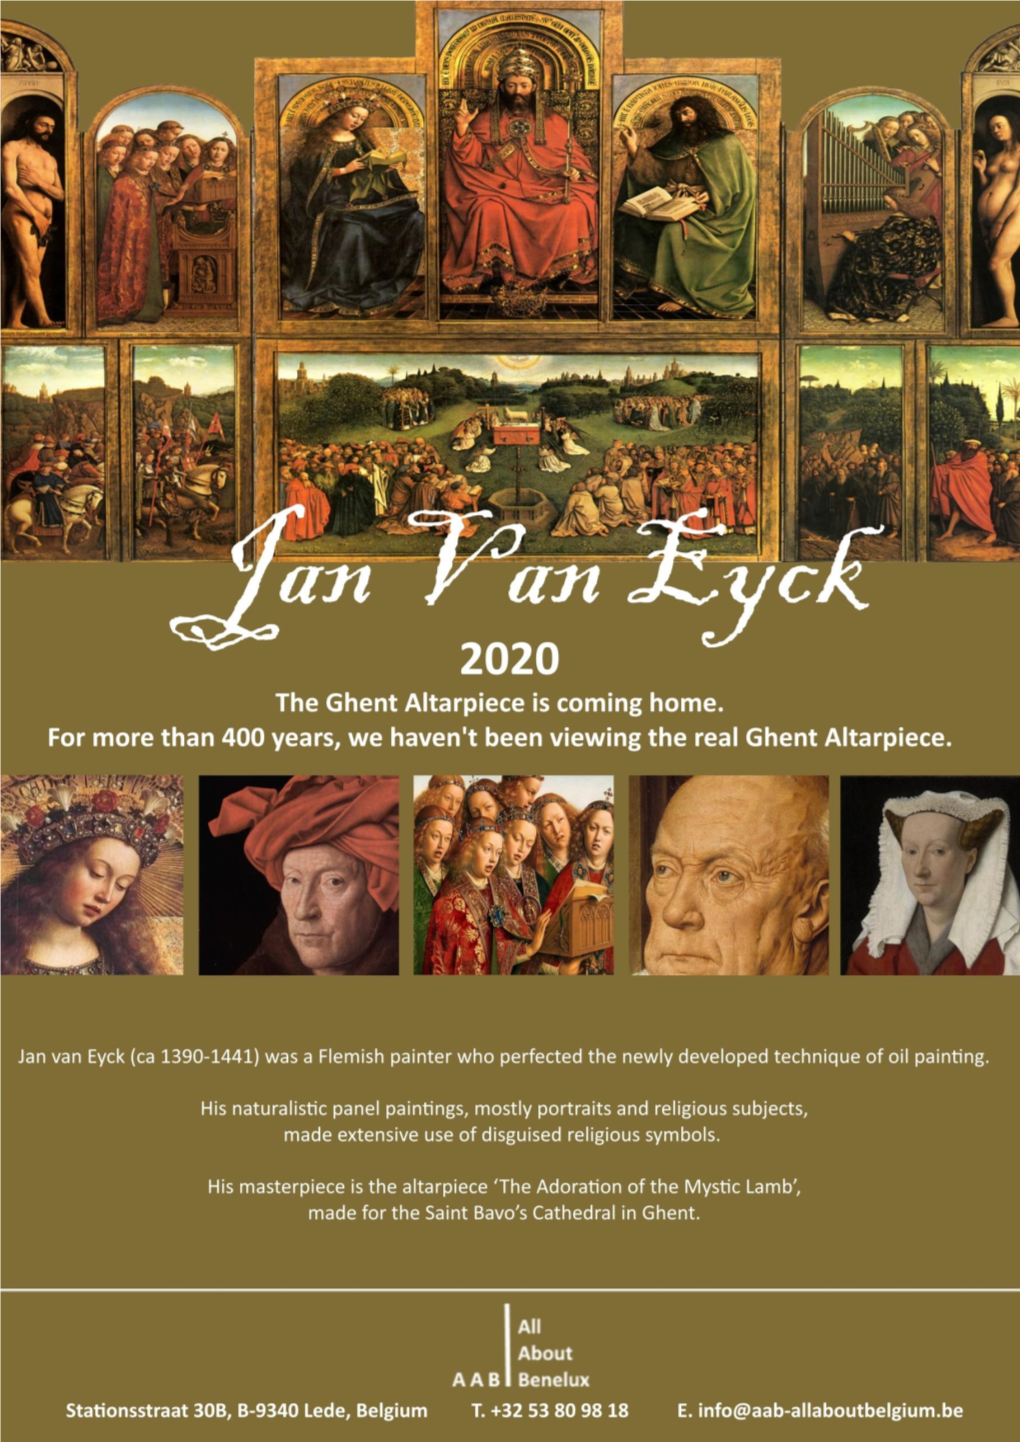 Jan Van Eyck and the Moreel Triptych by Hans Memling